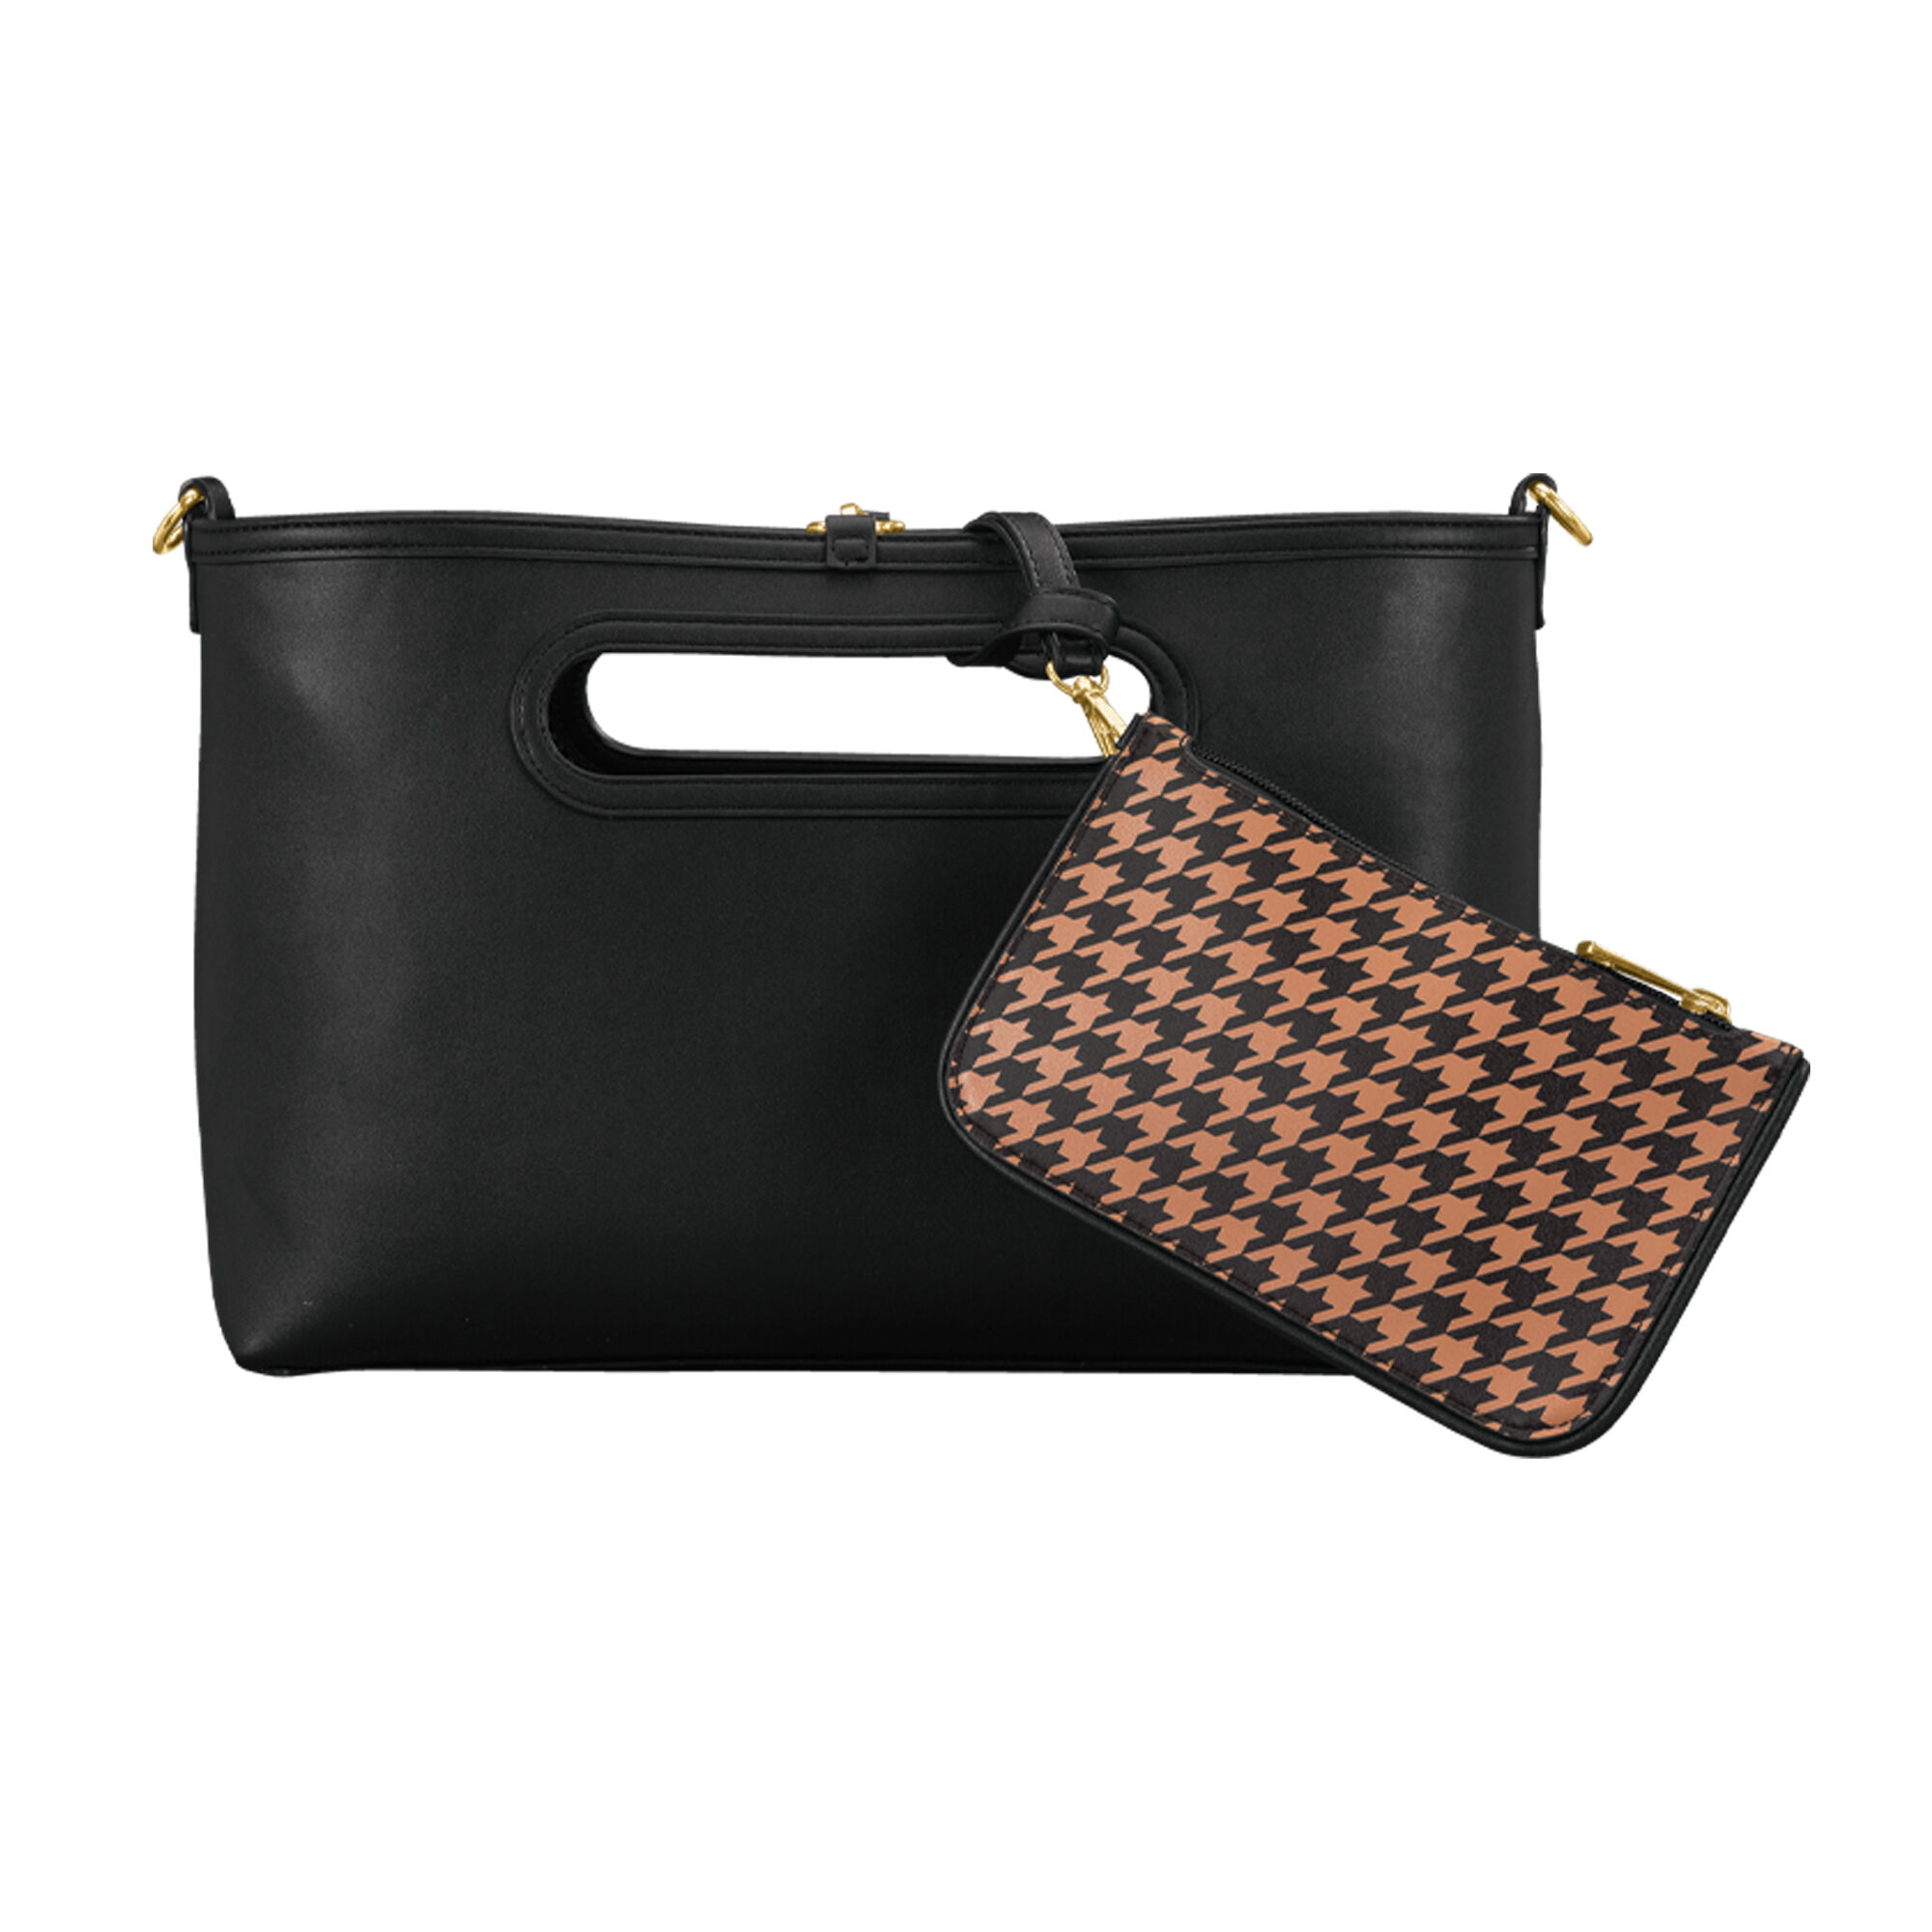 The Cameron Handbag Set 6932 0018 f black handbag wristlet